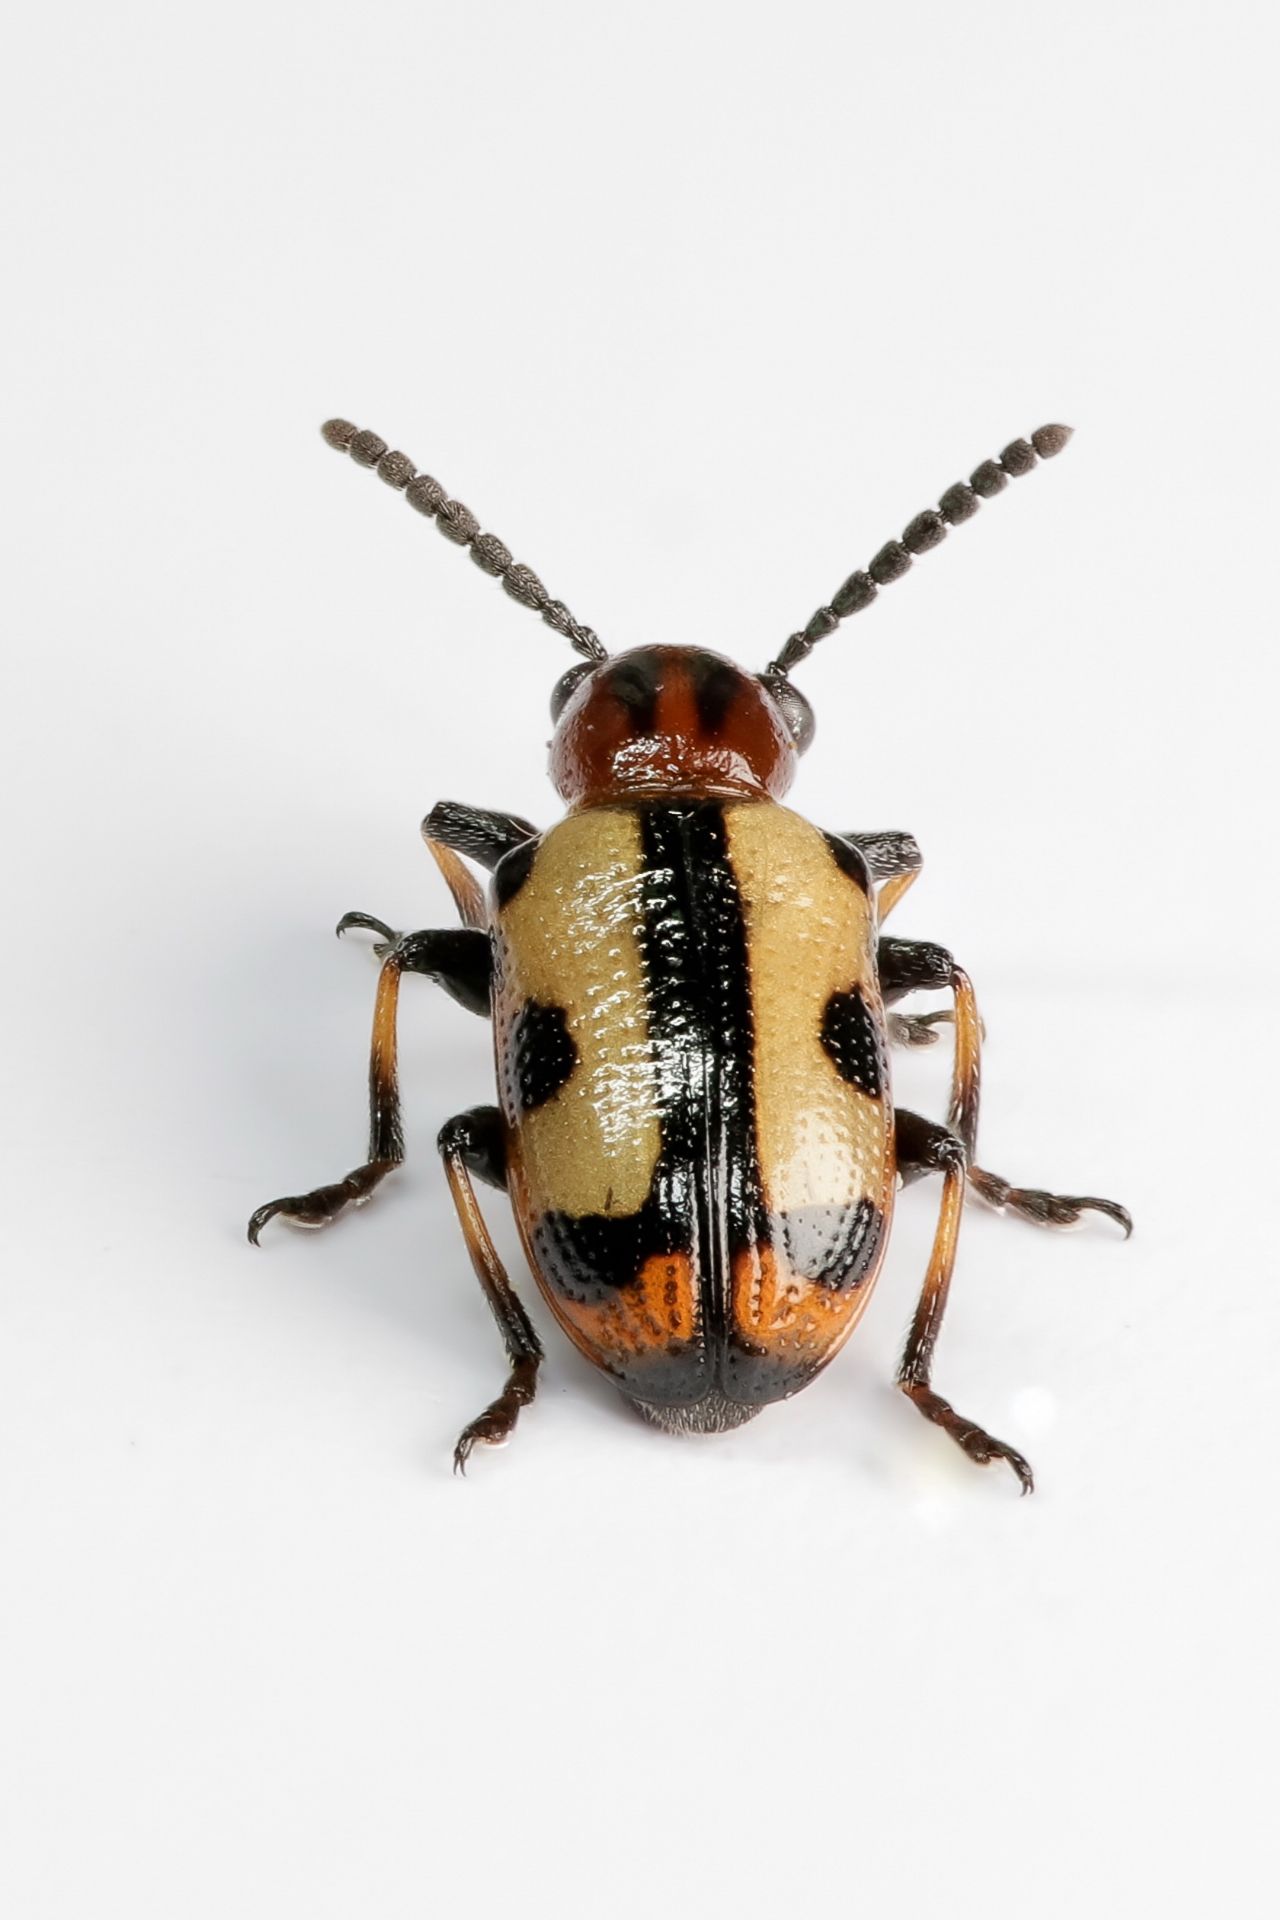 Chrysomelidae - Crioceris paracenthesis